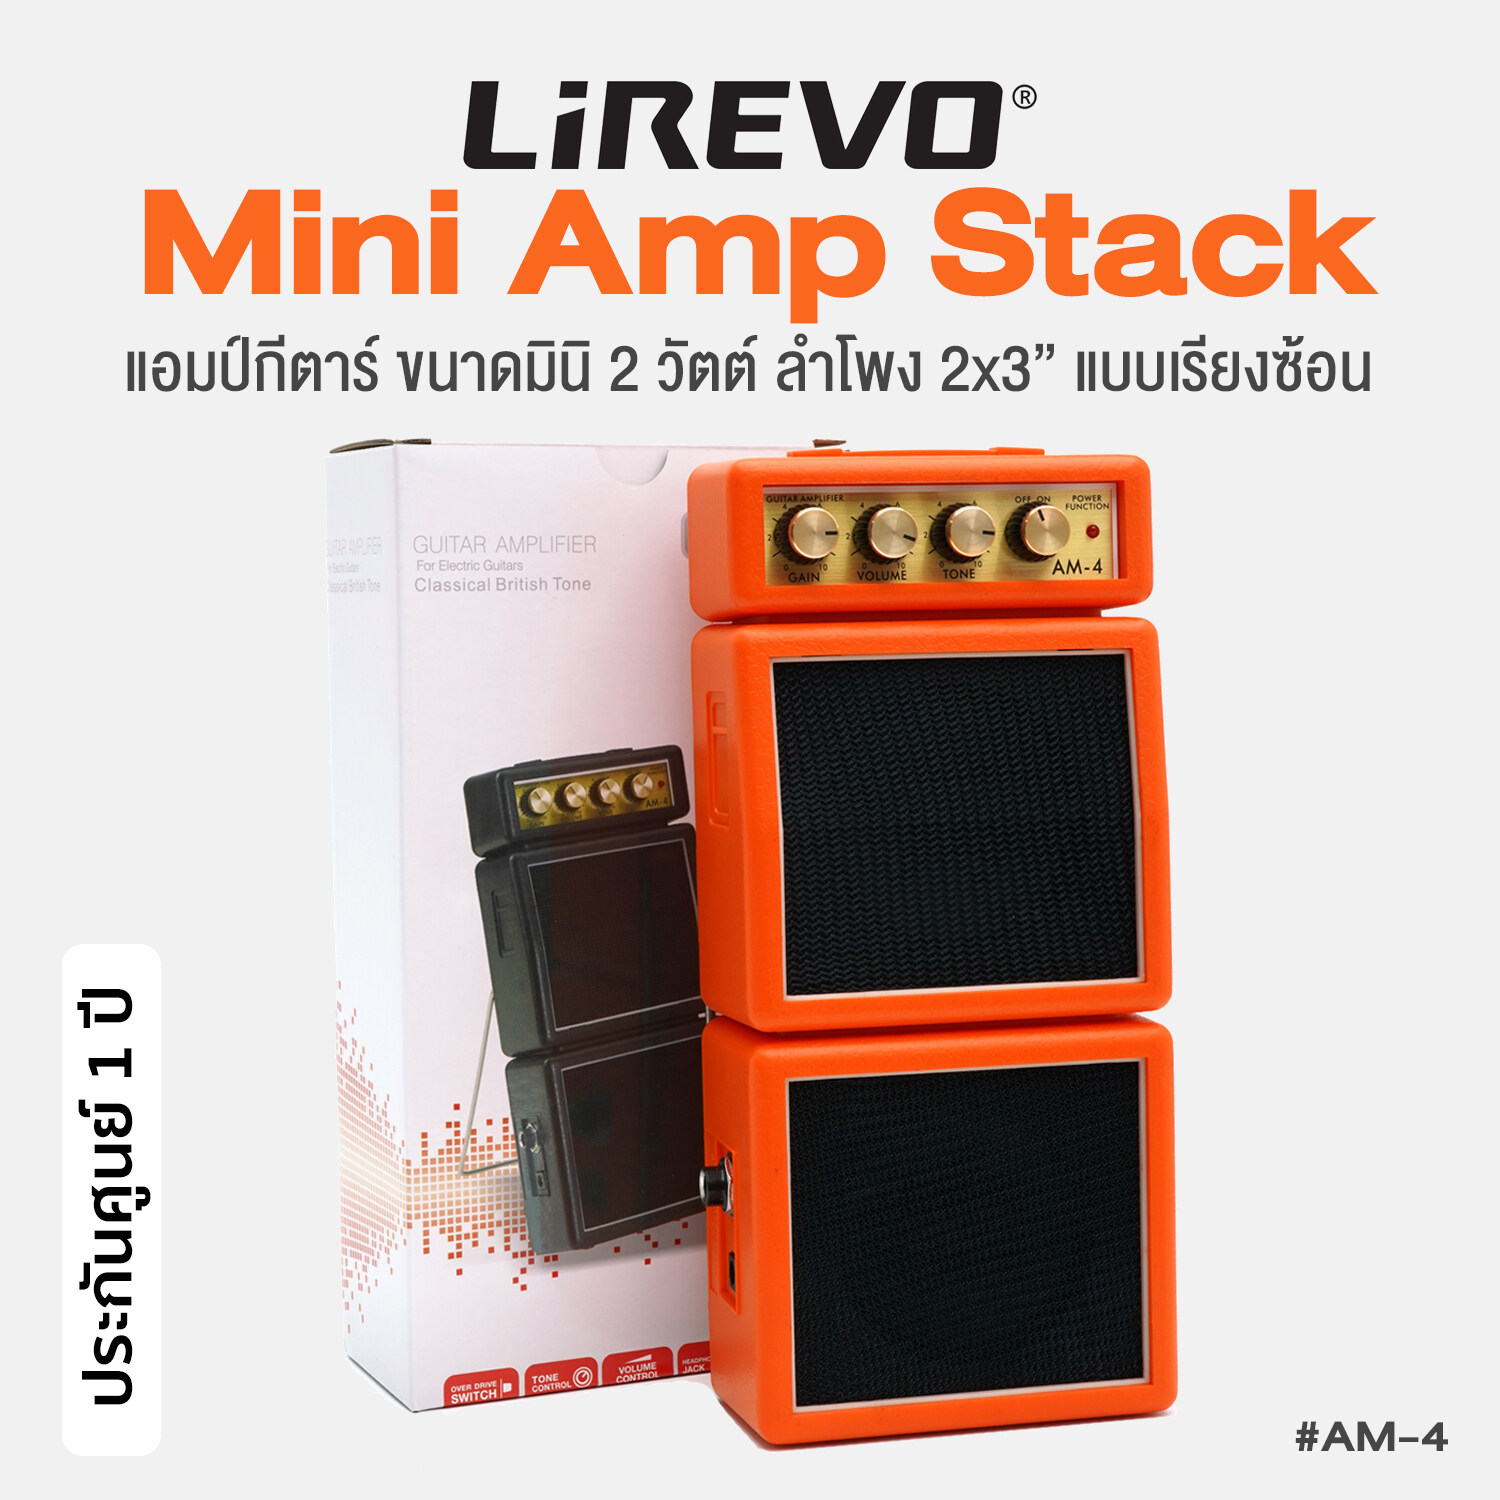 Lirevo(ลิเรโว) Mini Amp Stack